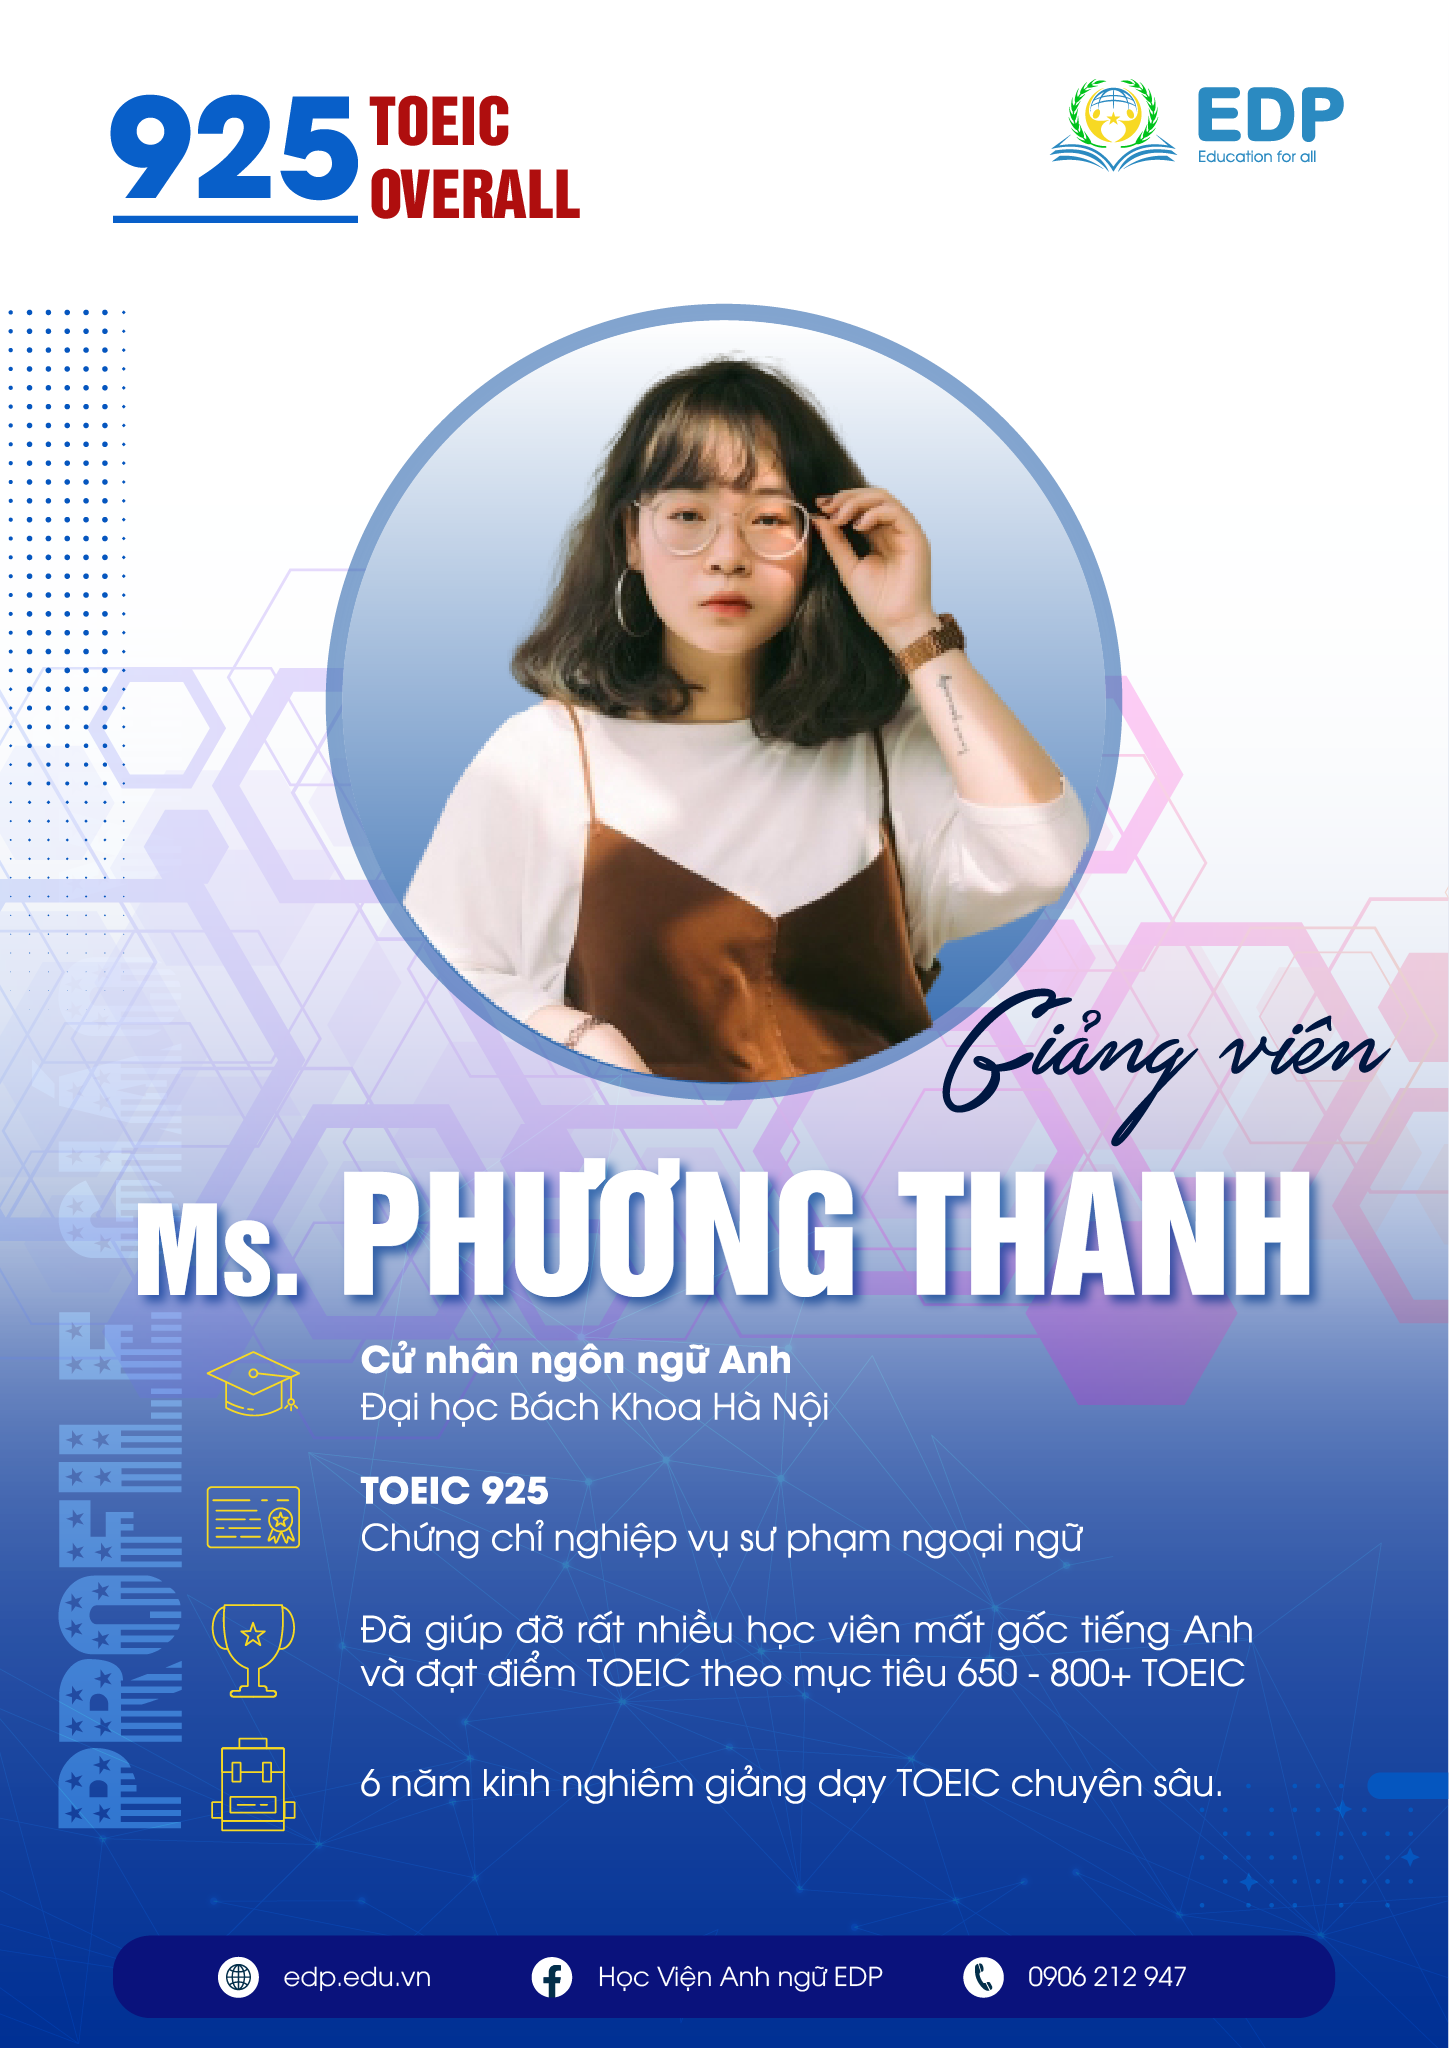 Le Thi Phuong Thanh